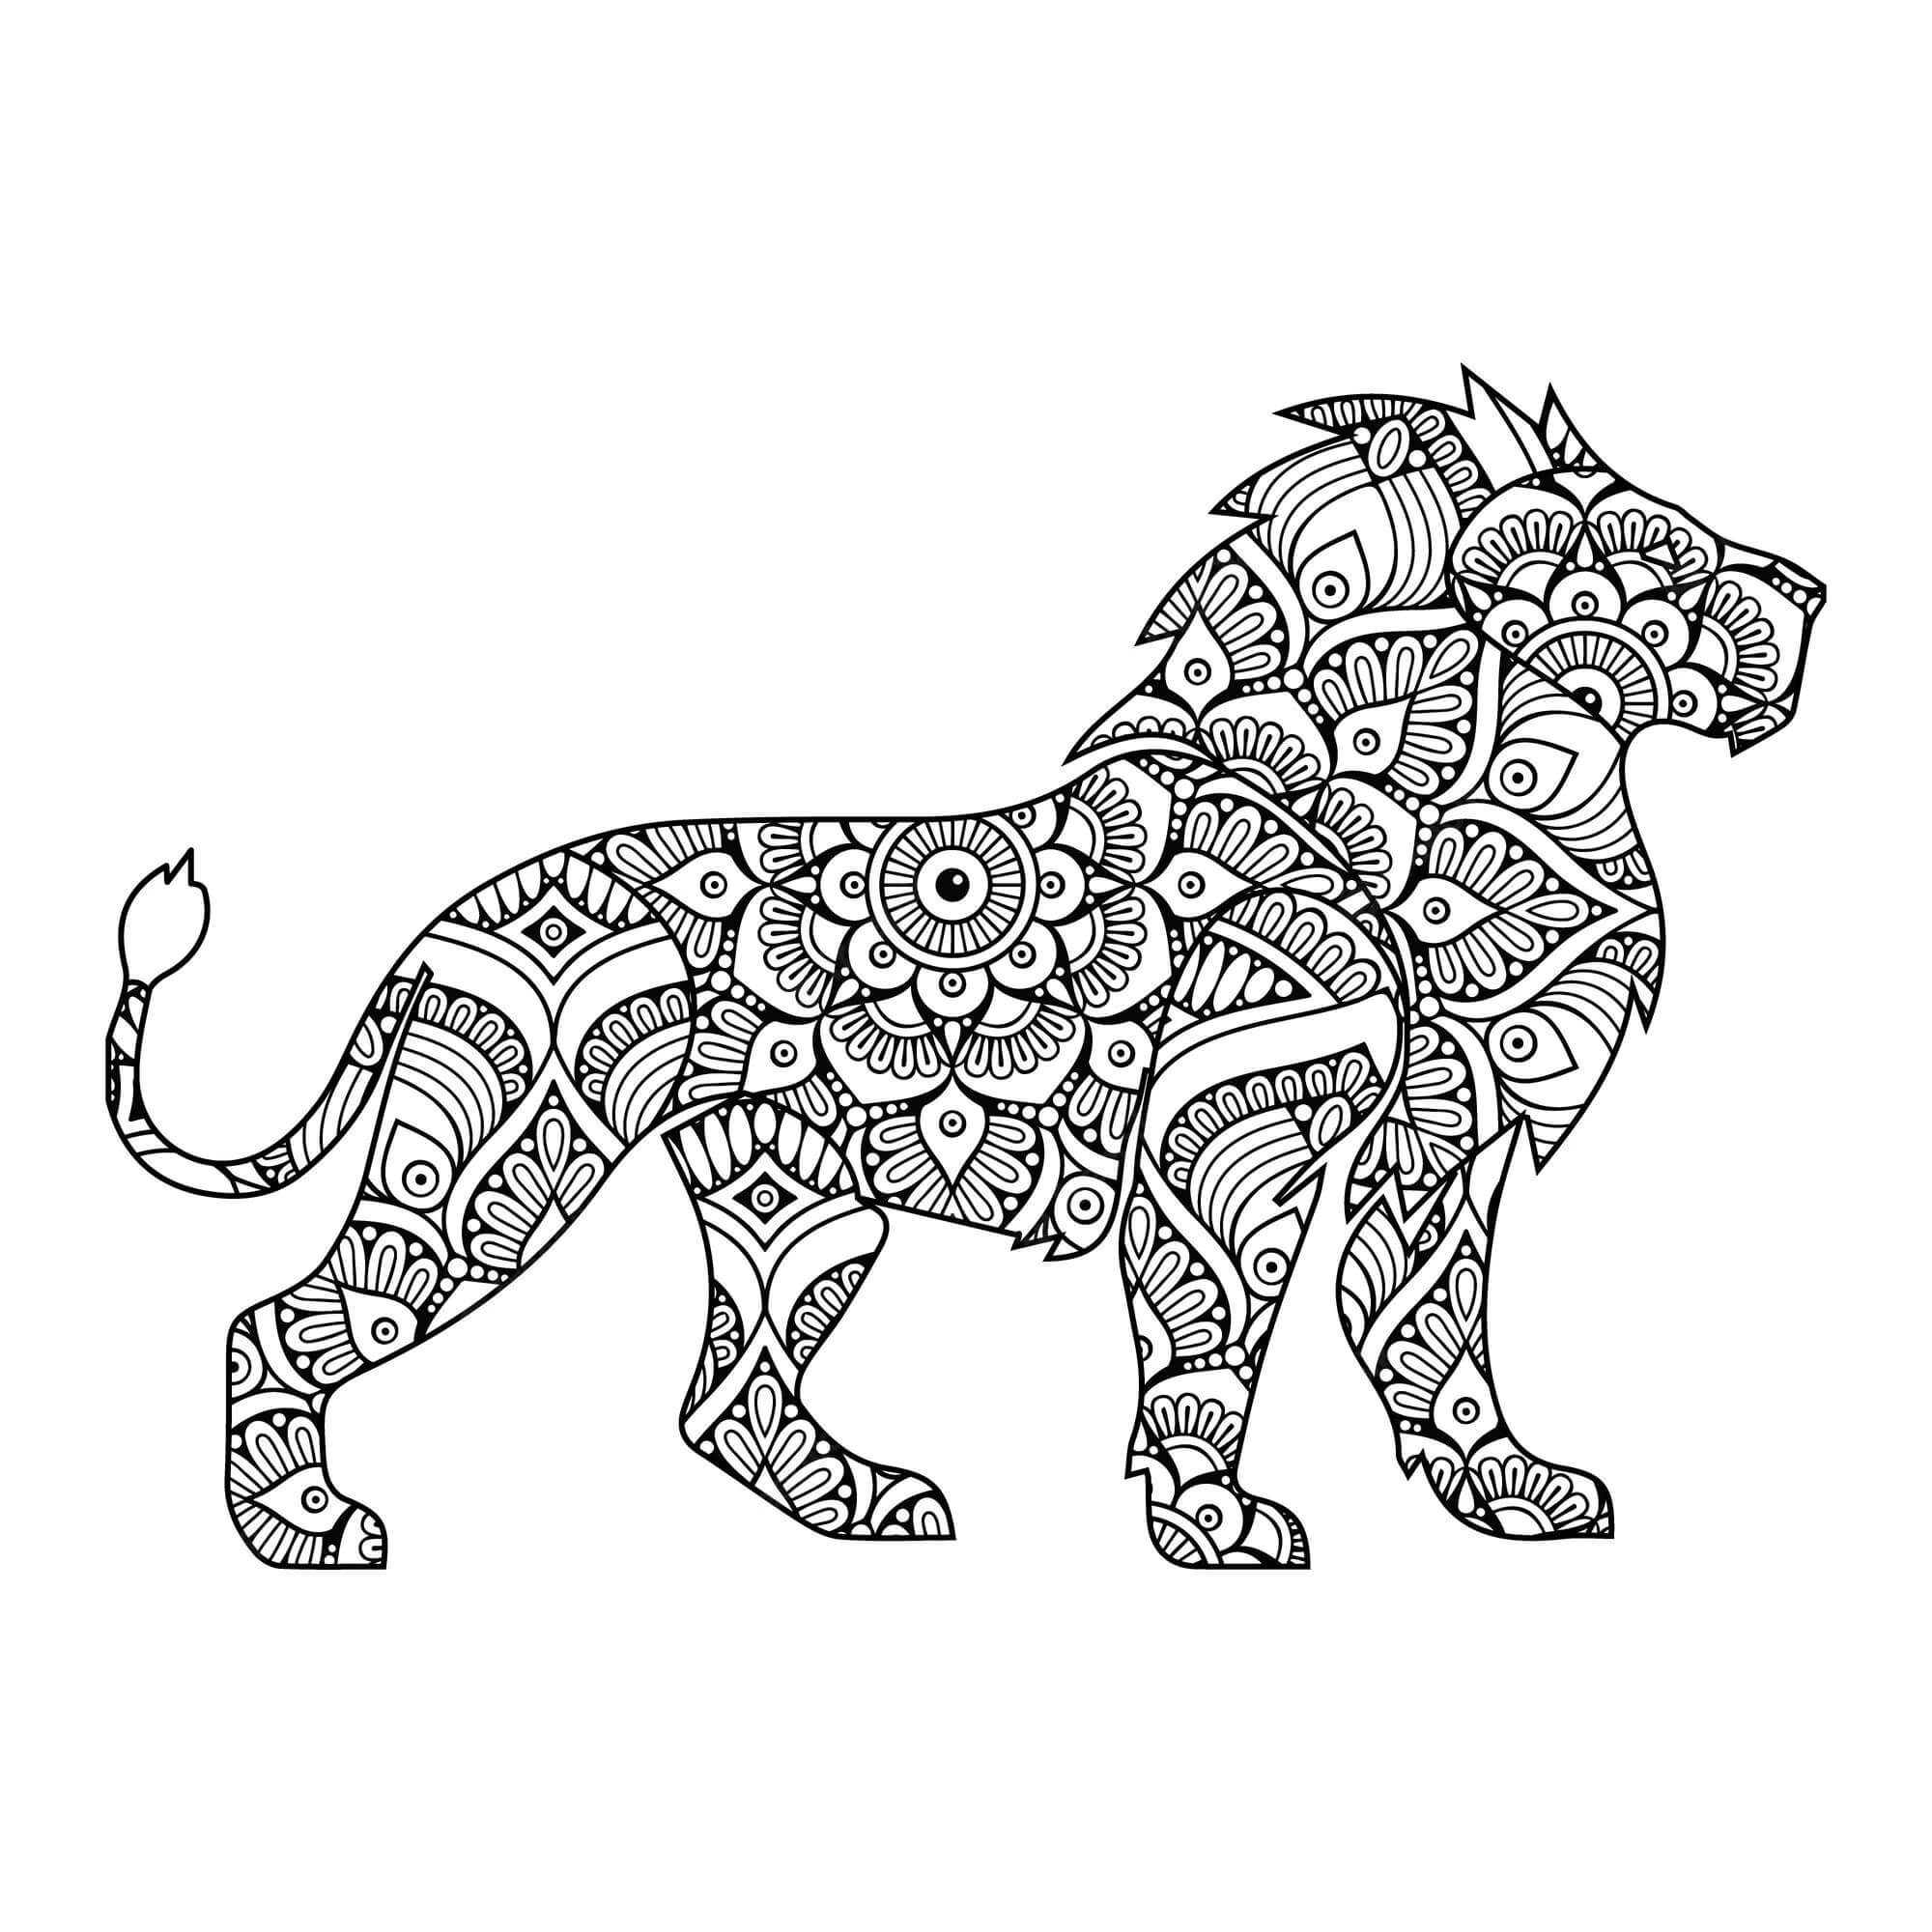 Mandala Lion Coloring Page - Sheet 6 Mandalas